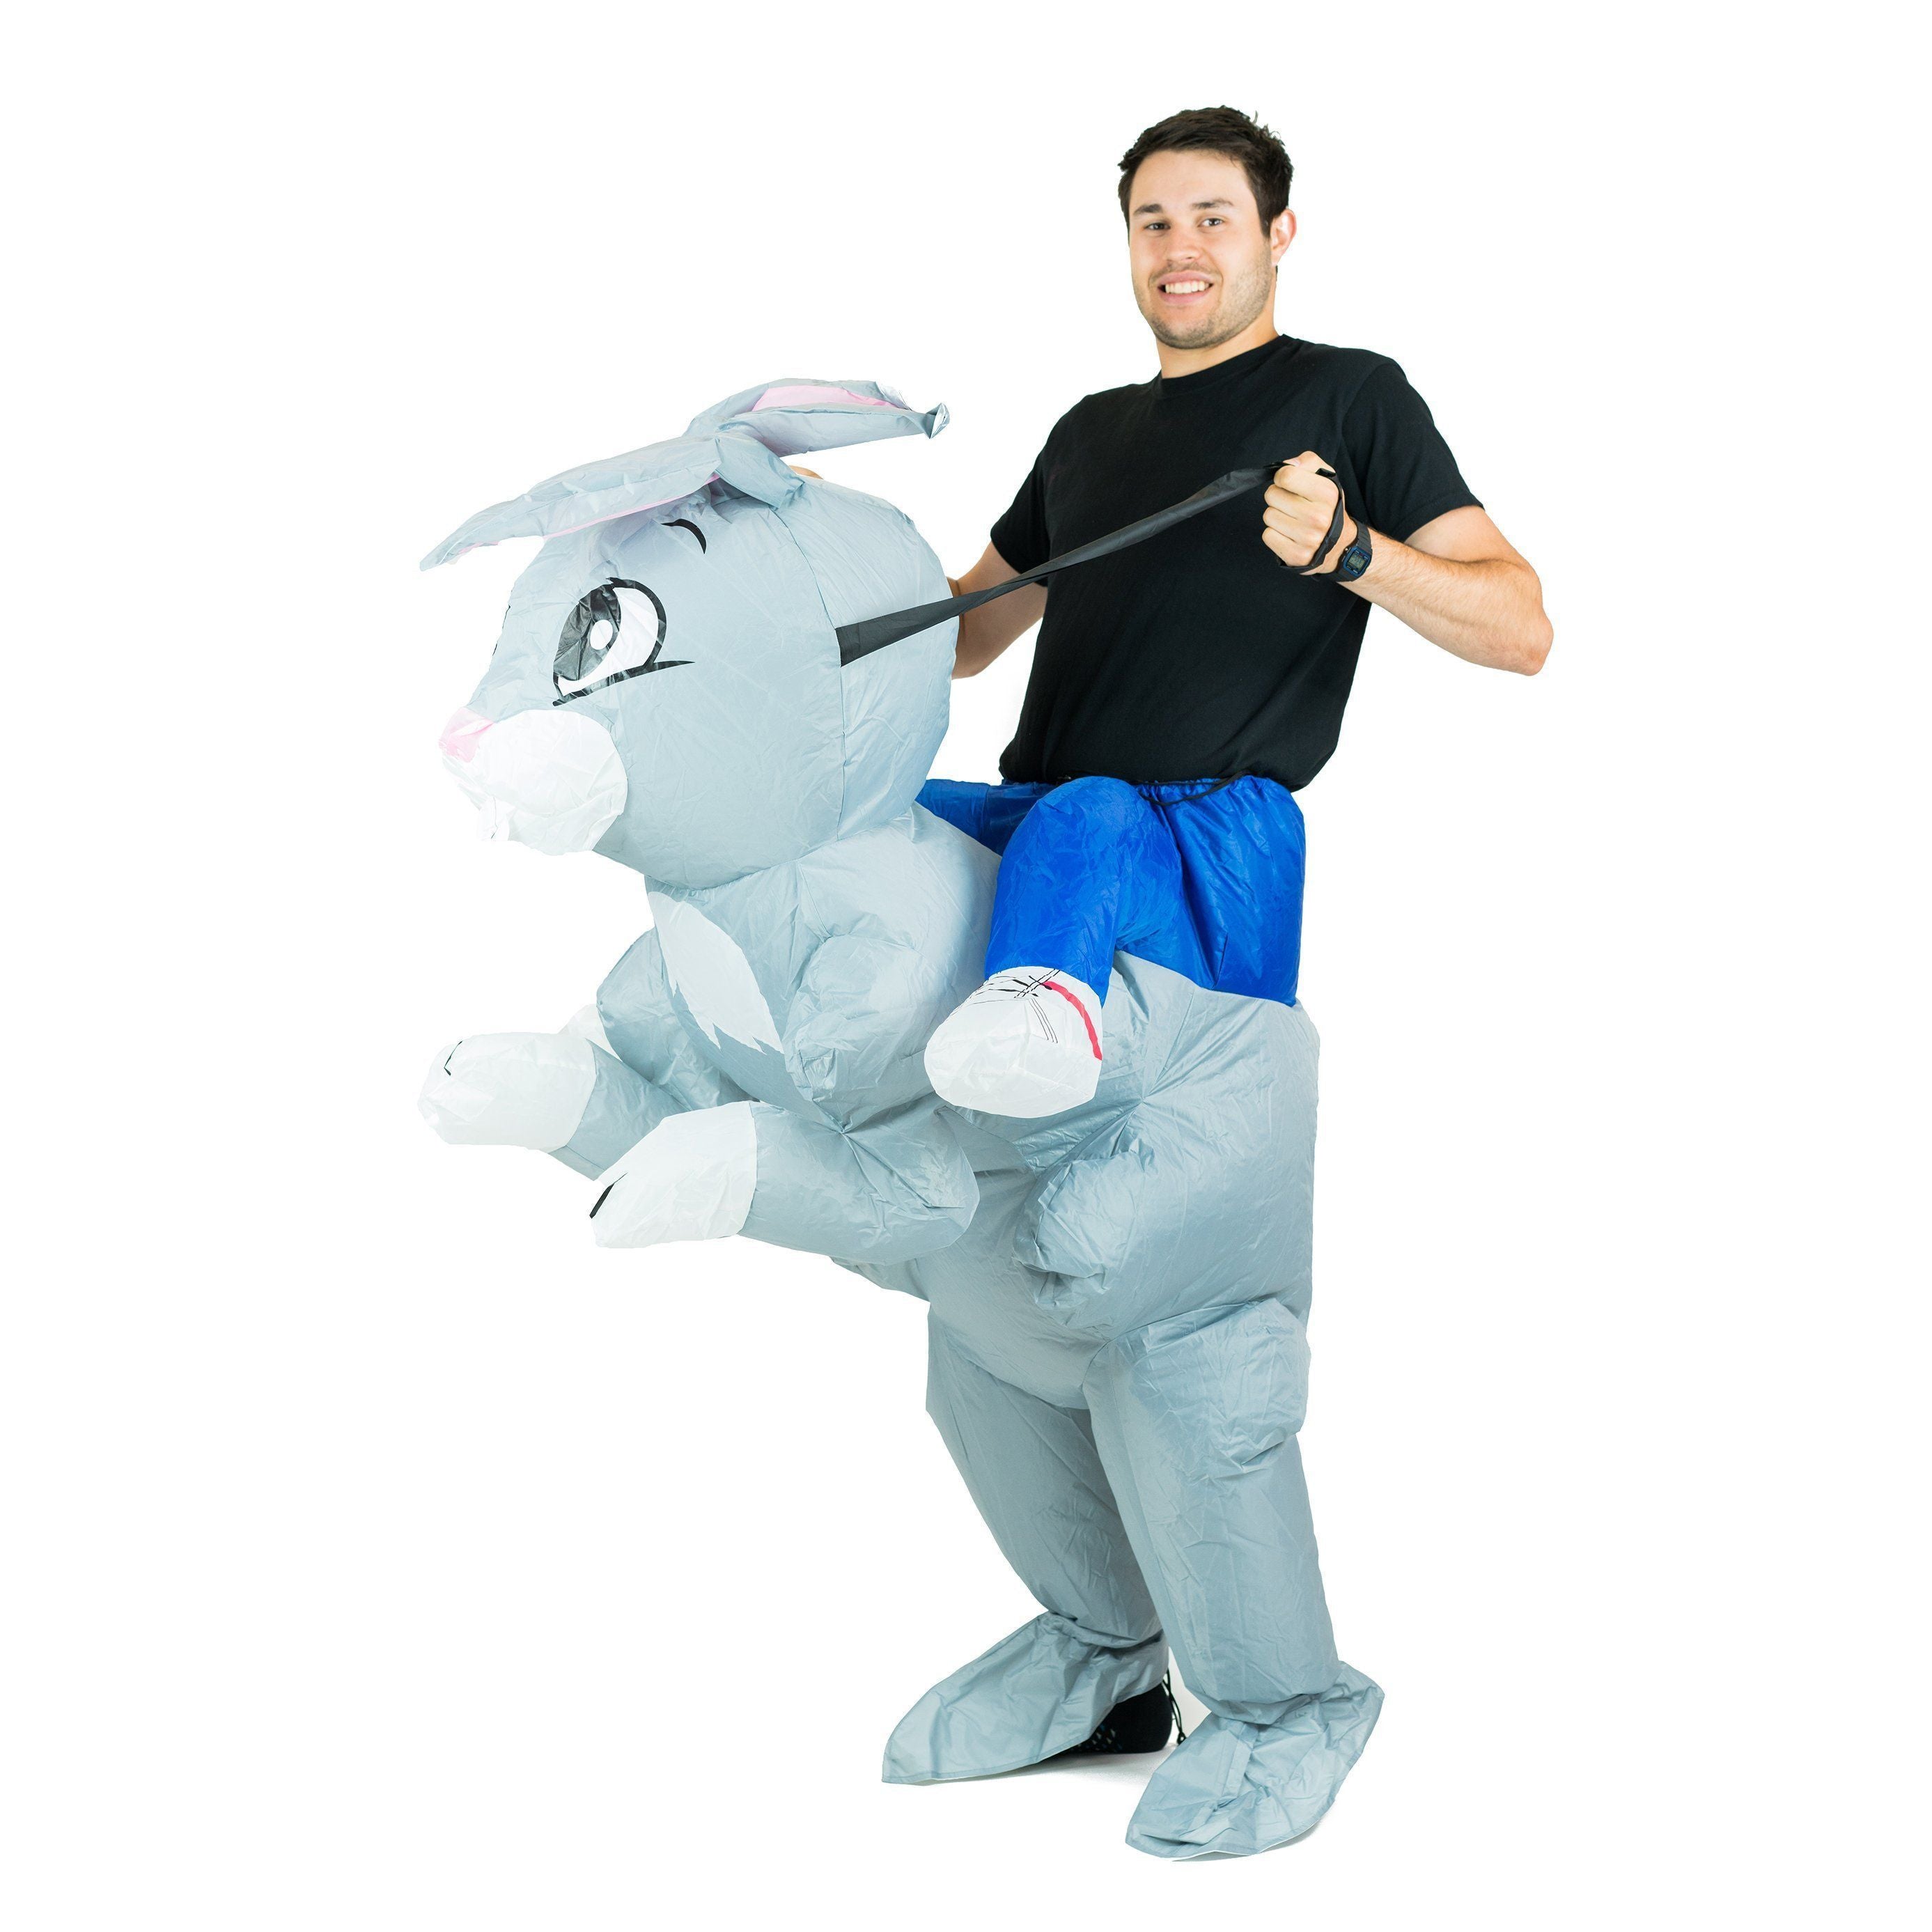 Fancy Dress - Inflatable Rabbit Costume